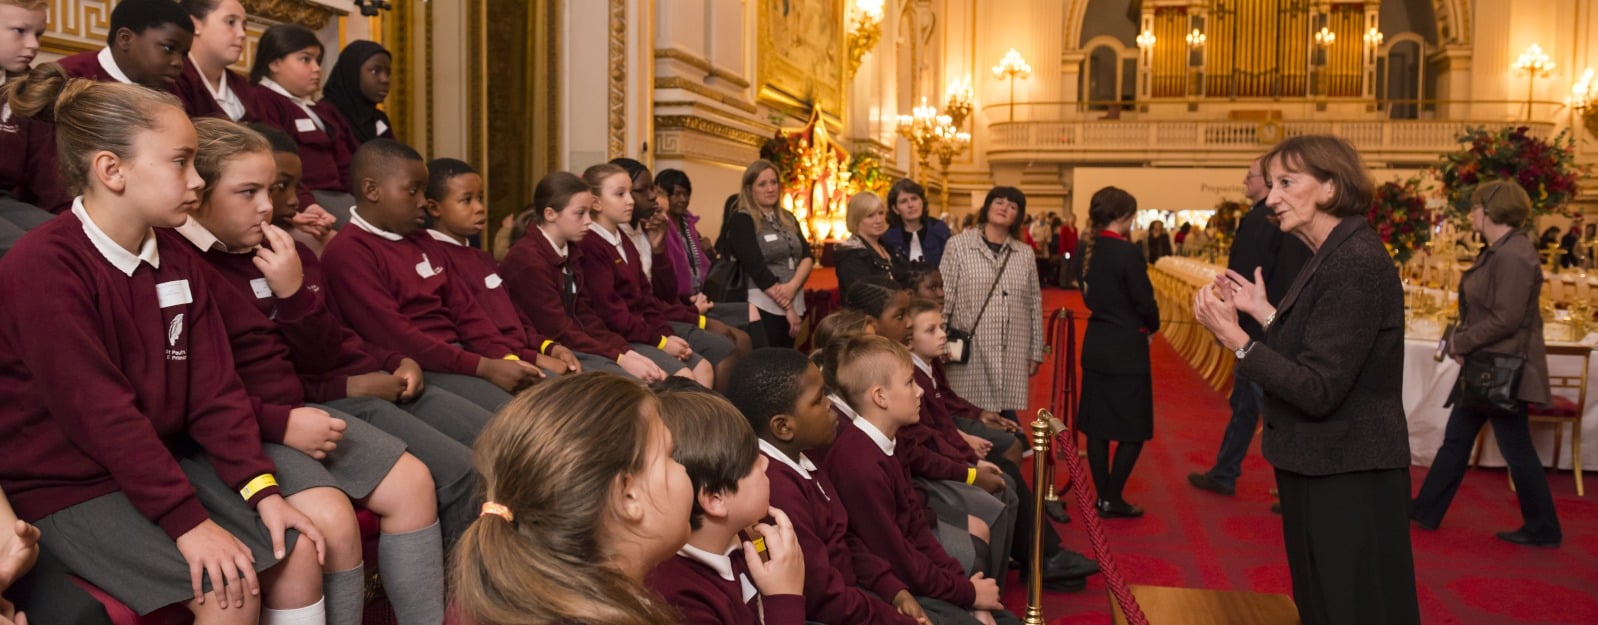 Pupils visit the Ballroom, Buckingham Palace